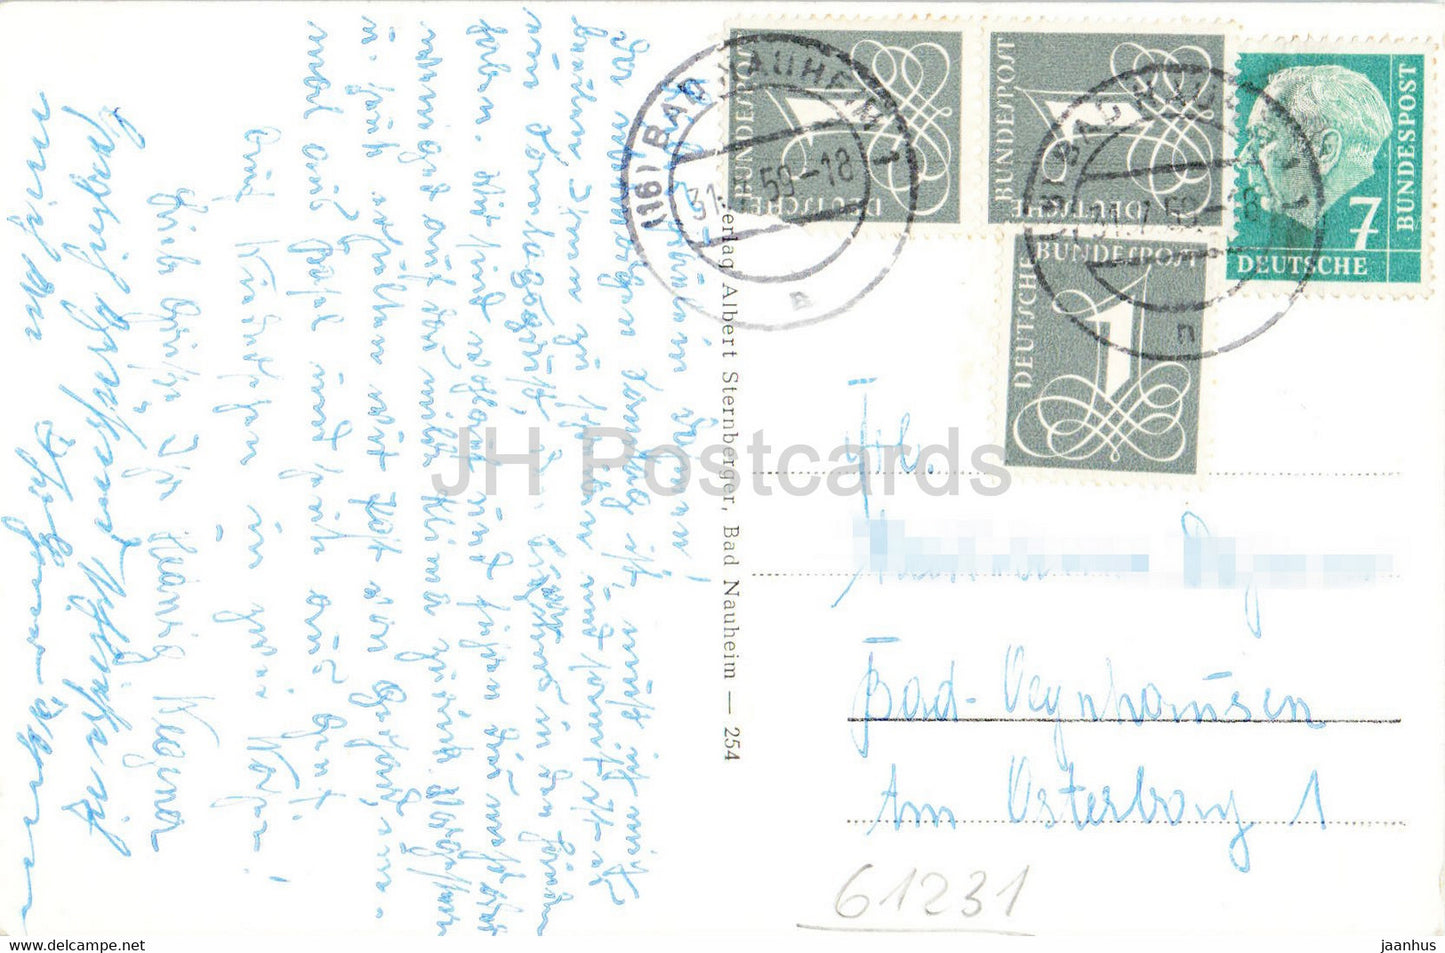 Bad Nauheim - Sprudelhof - carte postale ancienne - 1959 - Allemagne - utilisé